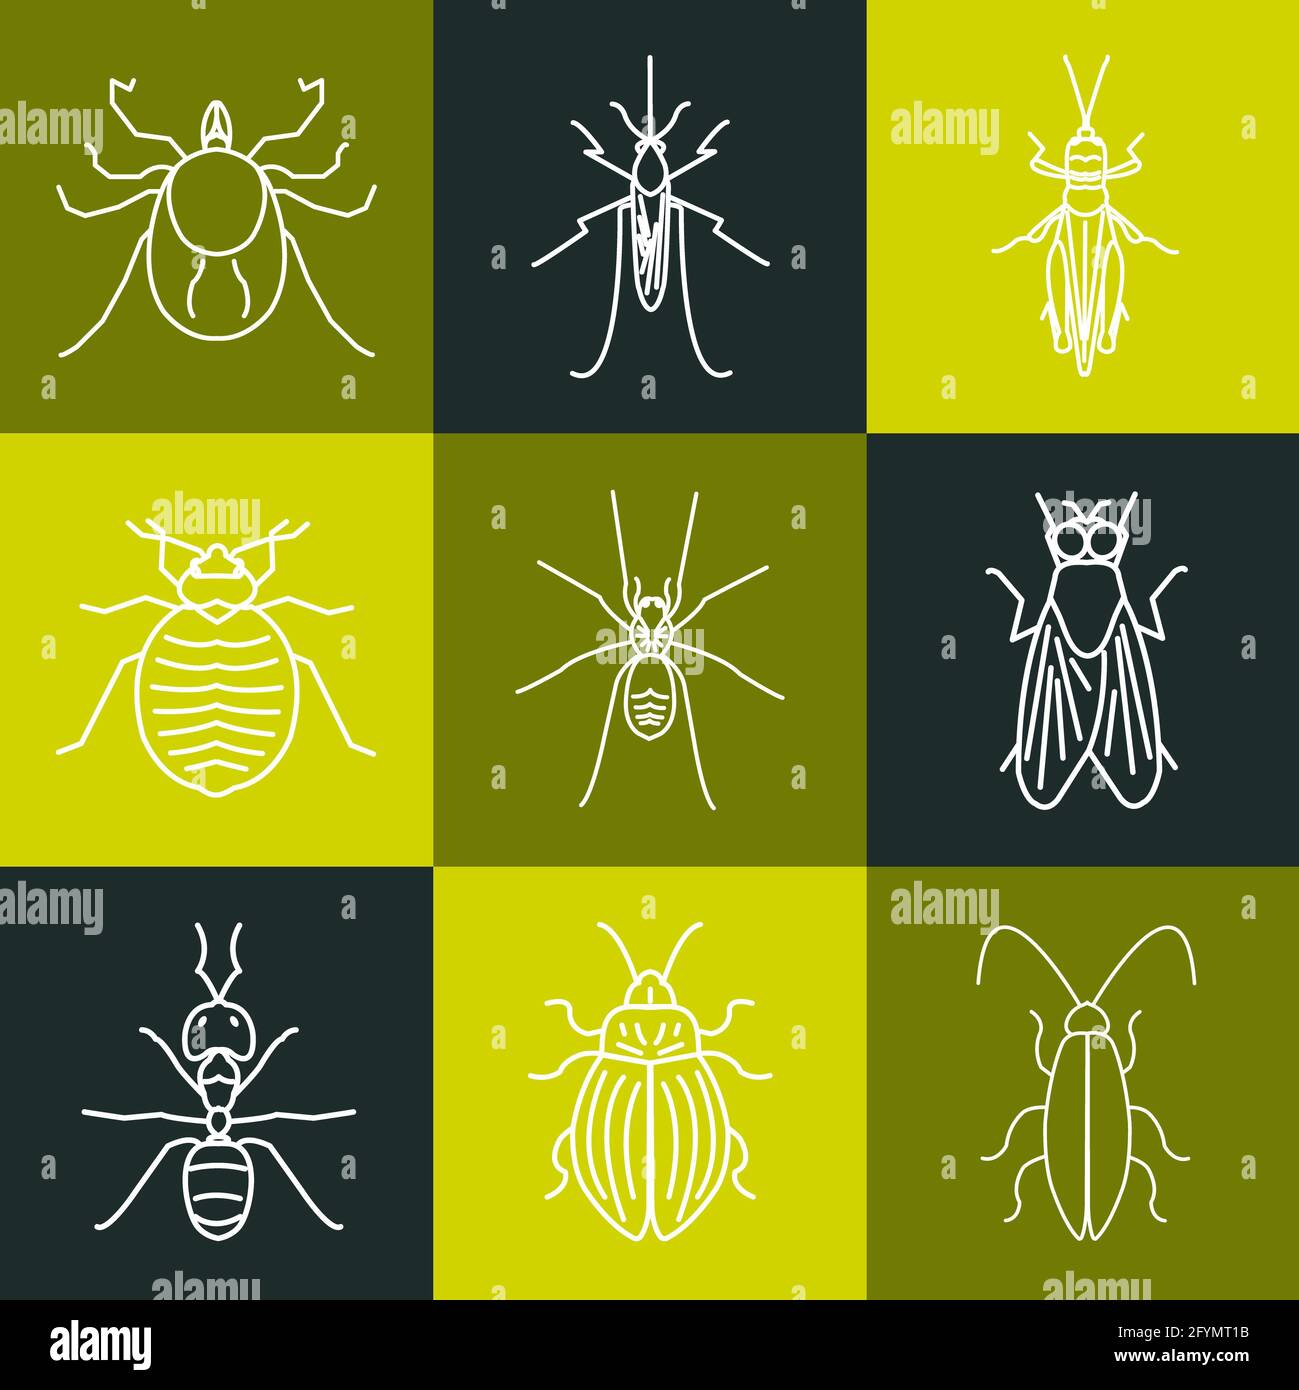 Common pests, conceptual illustration Stock Photo